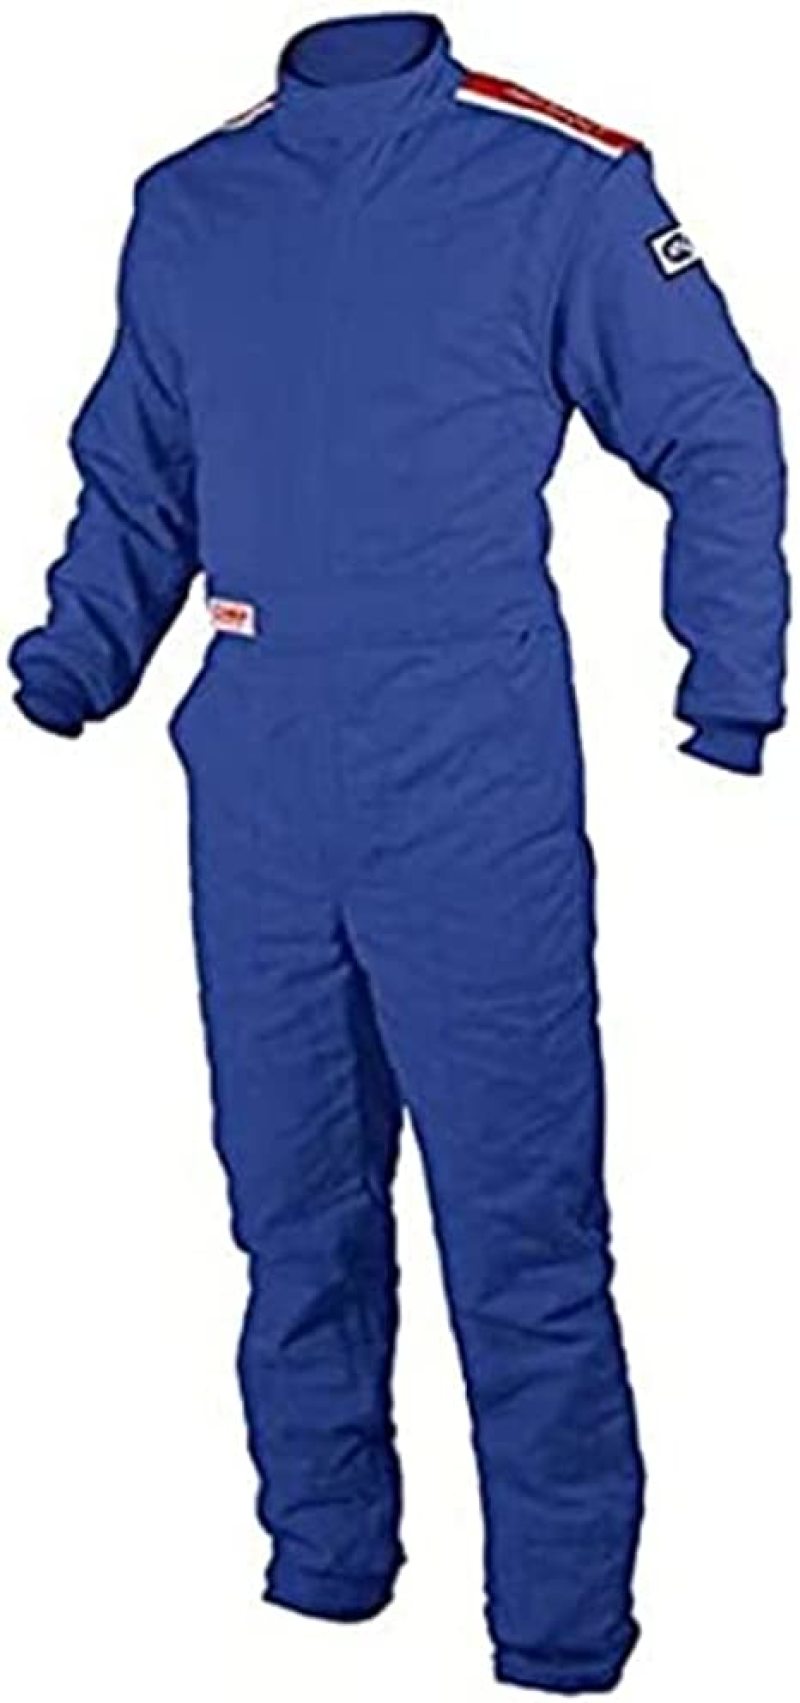 OMP Os 10 Suit - Medium (Blue) - IA01904041M